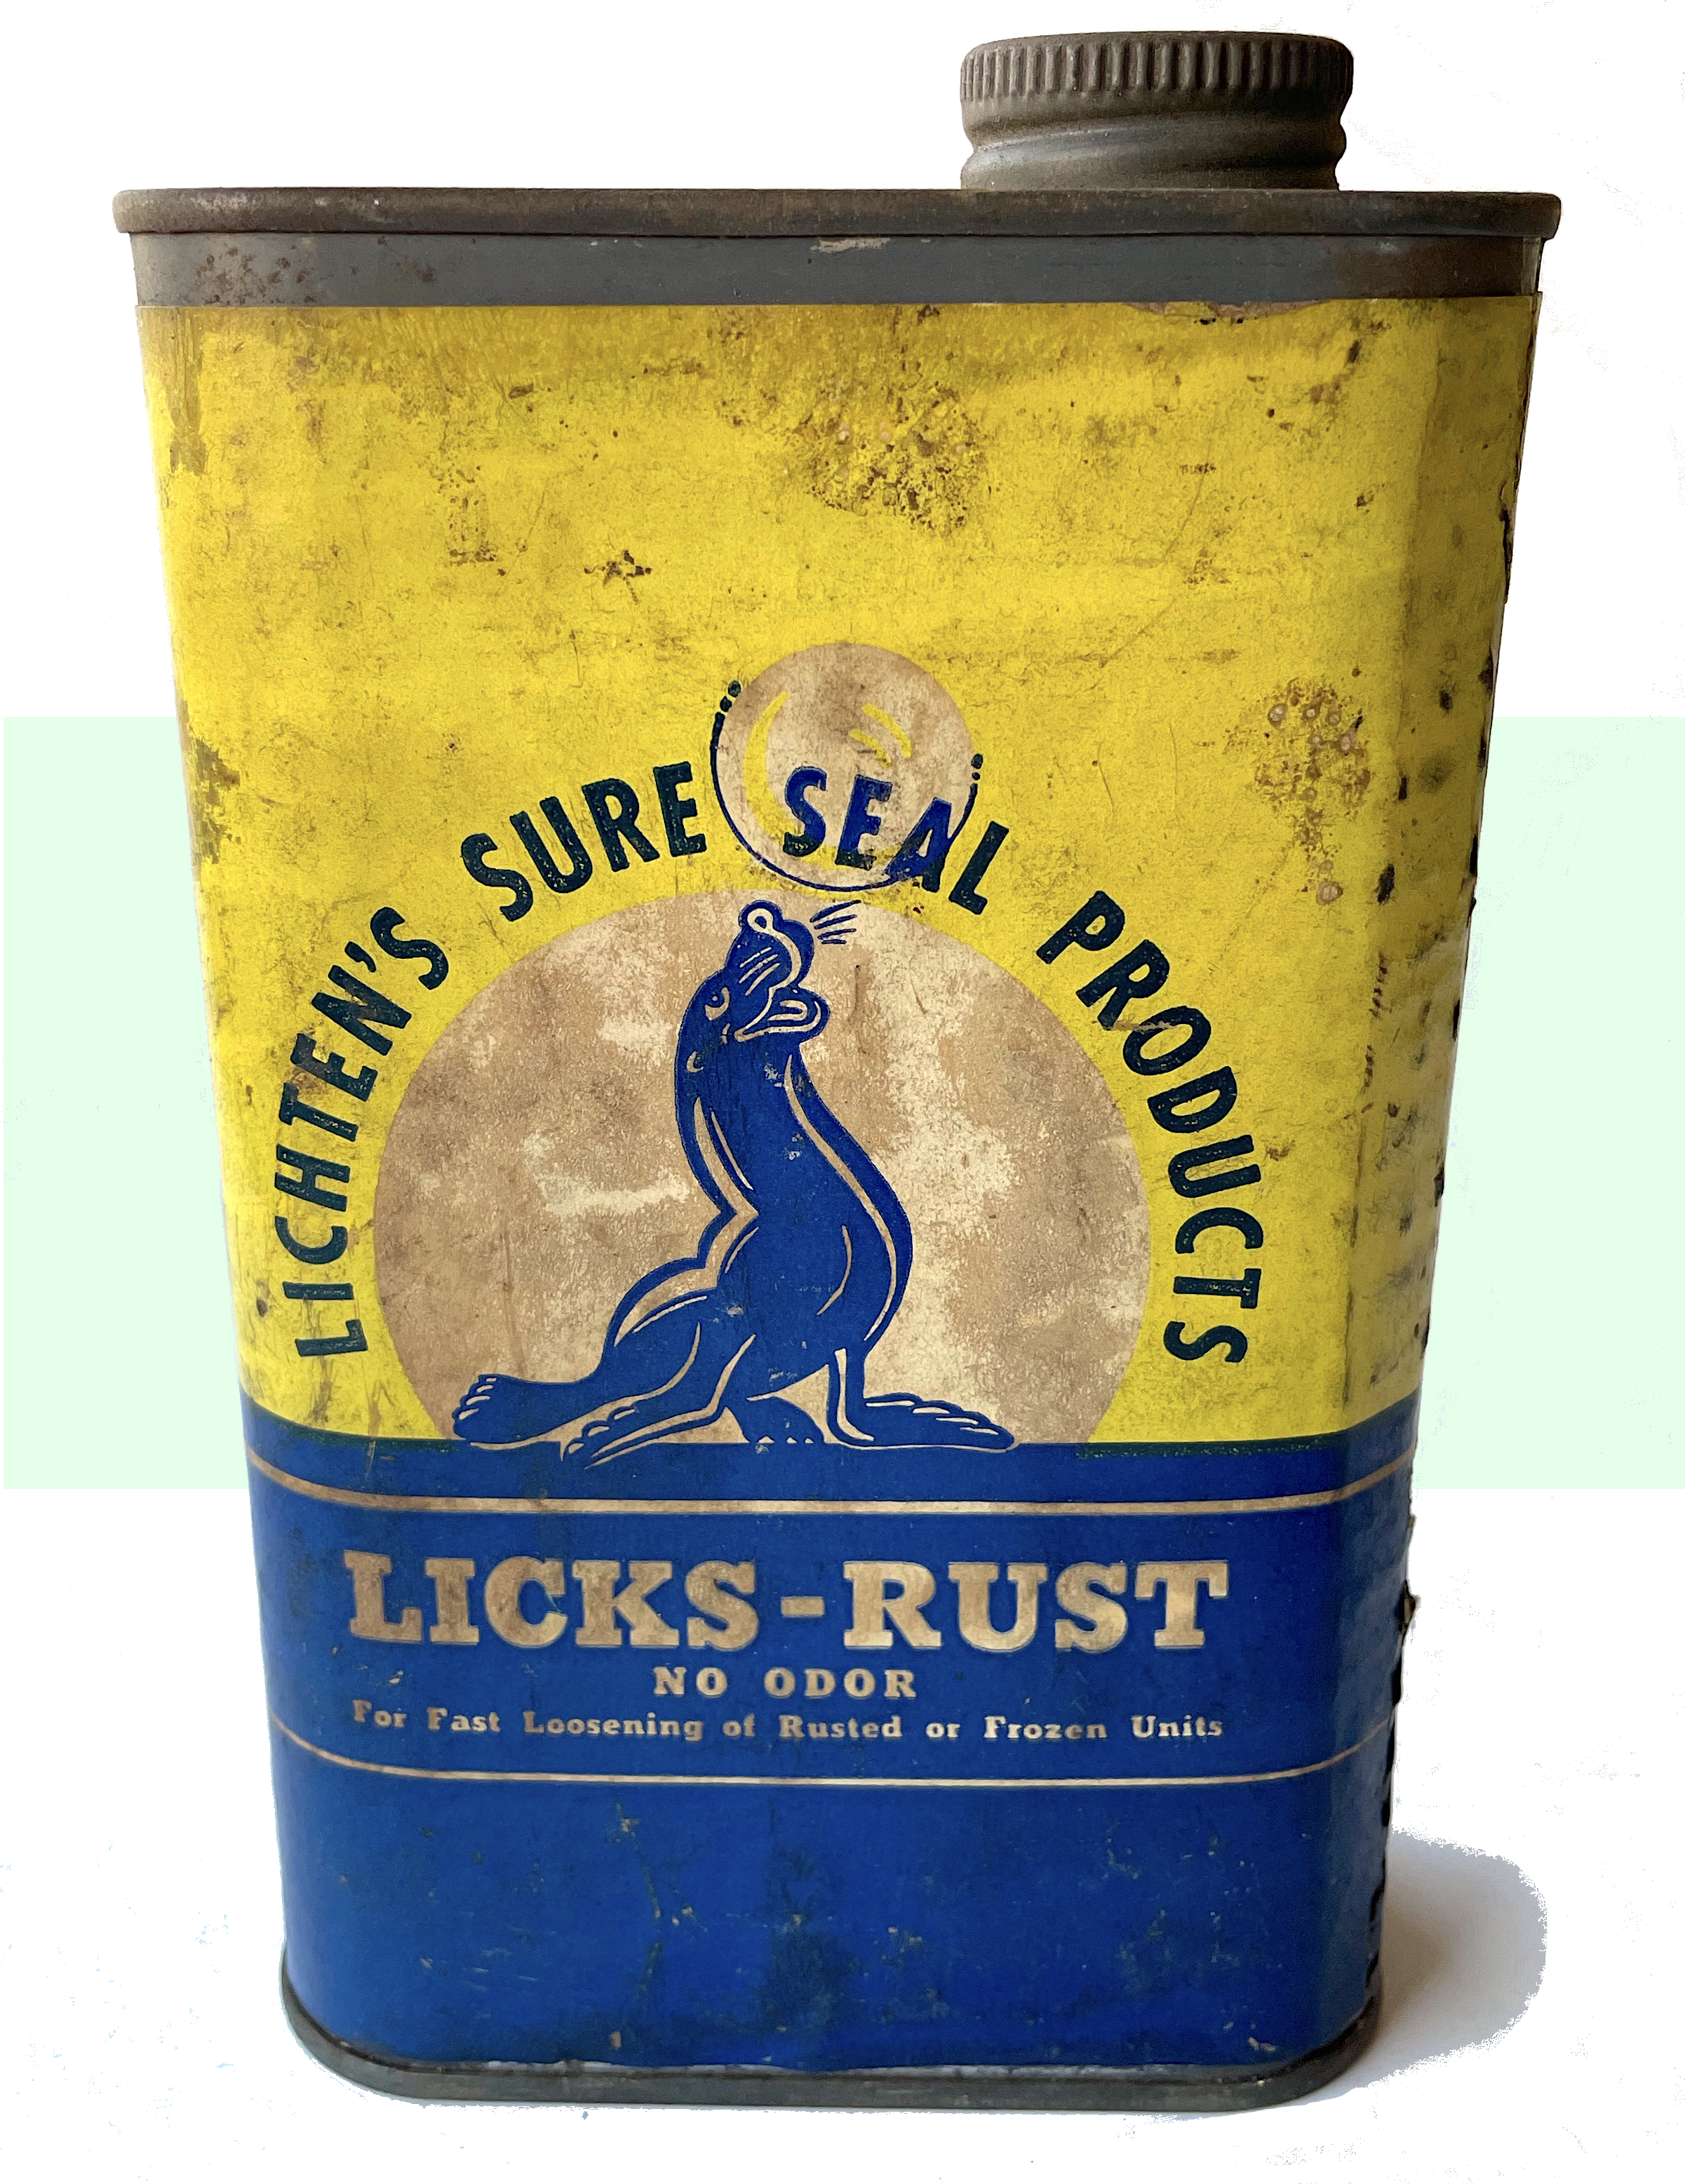 Sure Seal Products Co., est. 1949